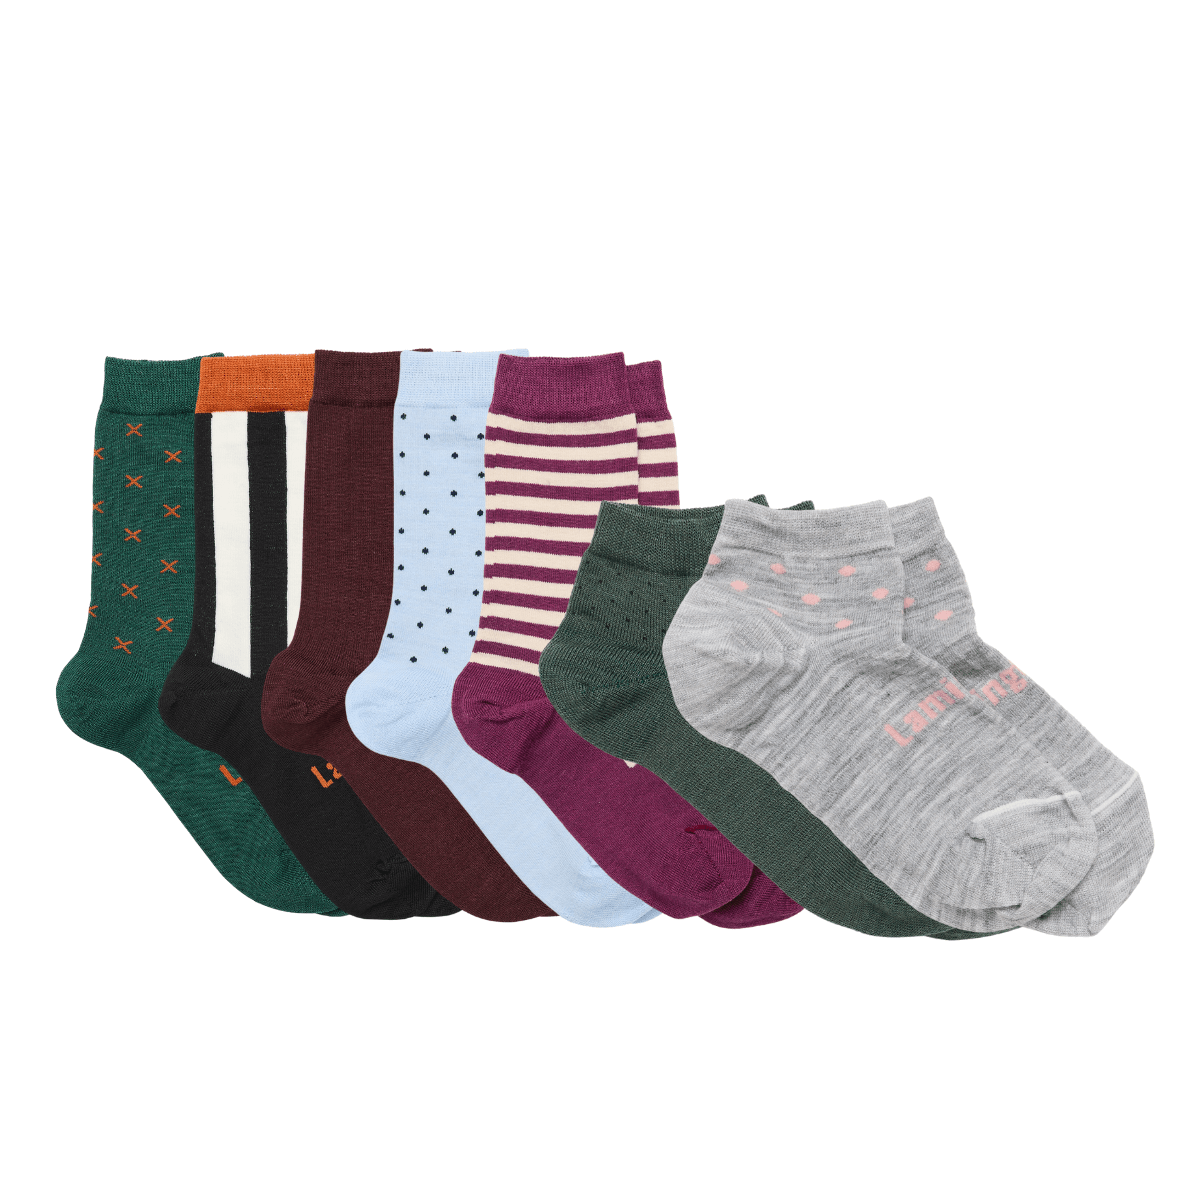 Merino Wool Socks - 7 Day Set